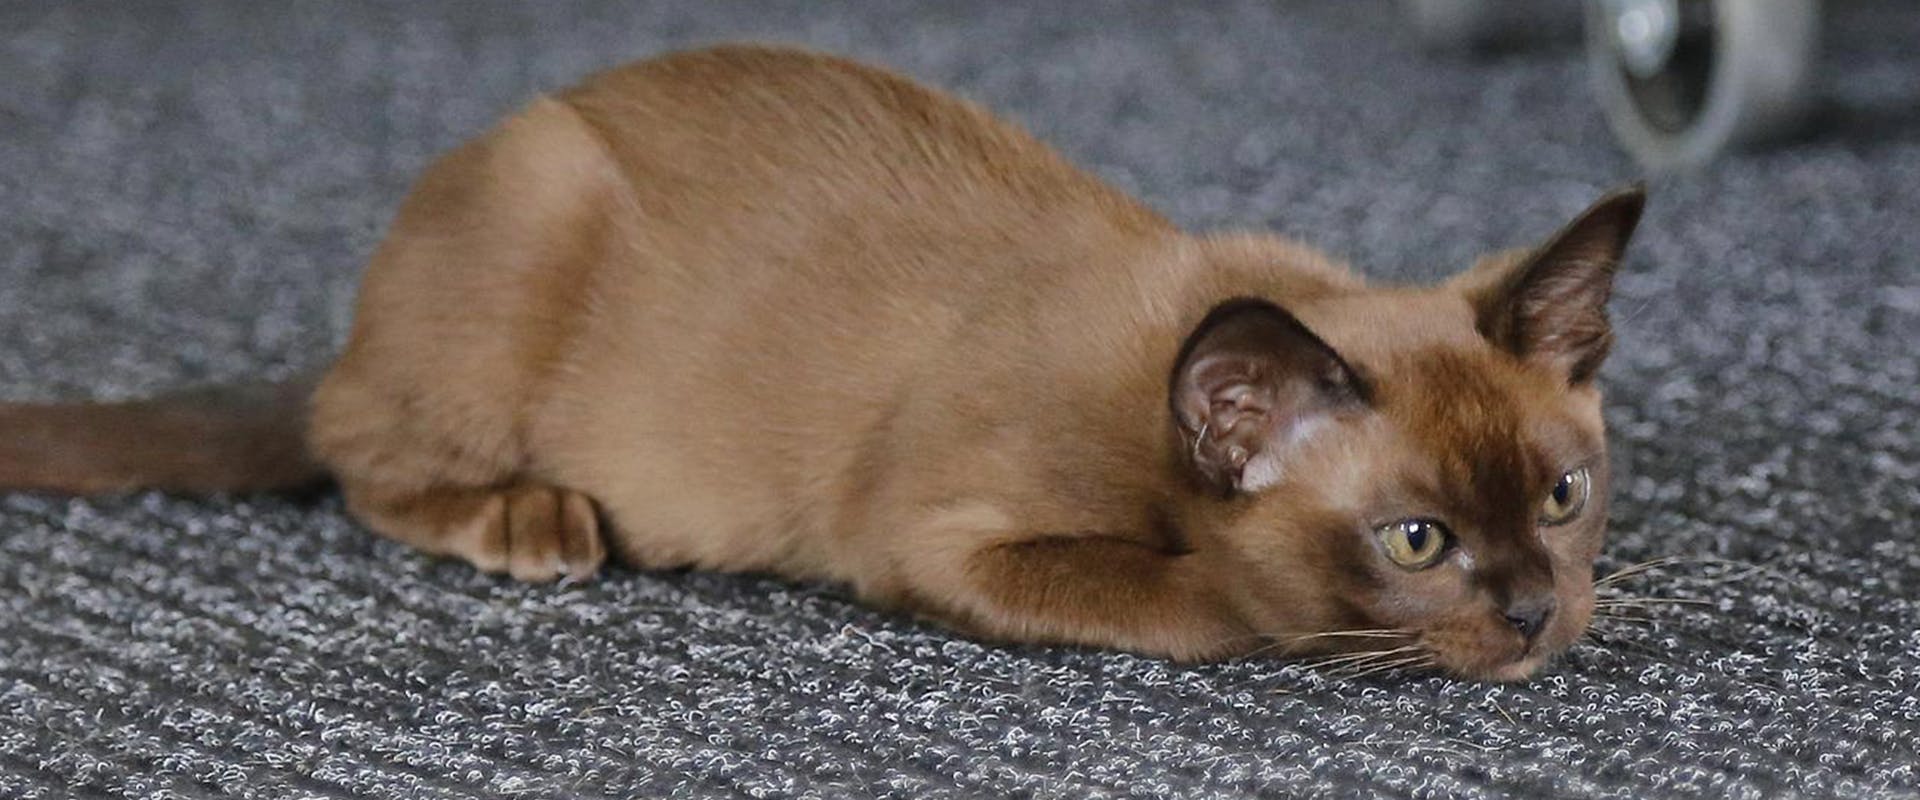 A burmese cat ready to pounce